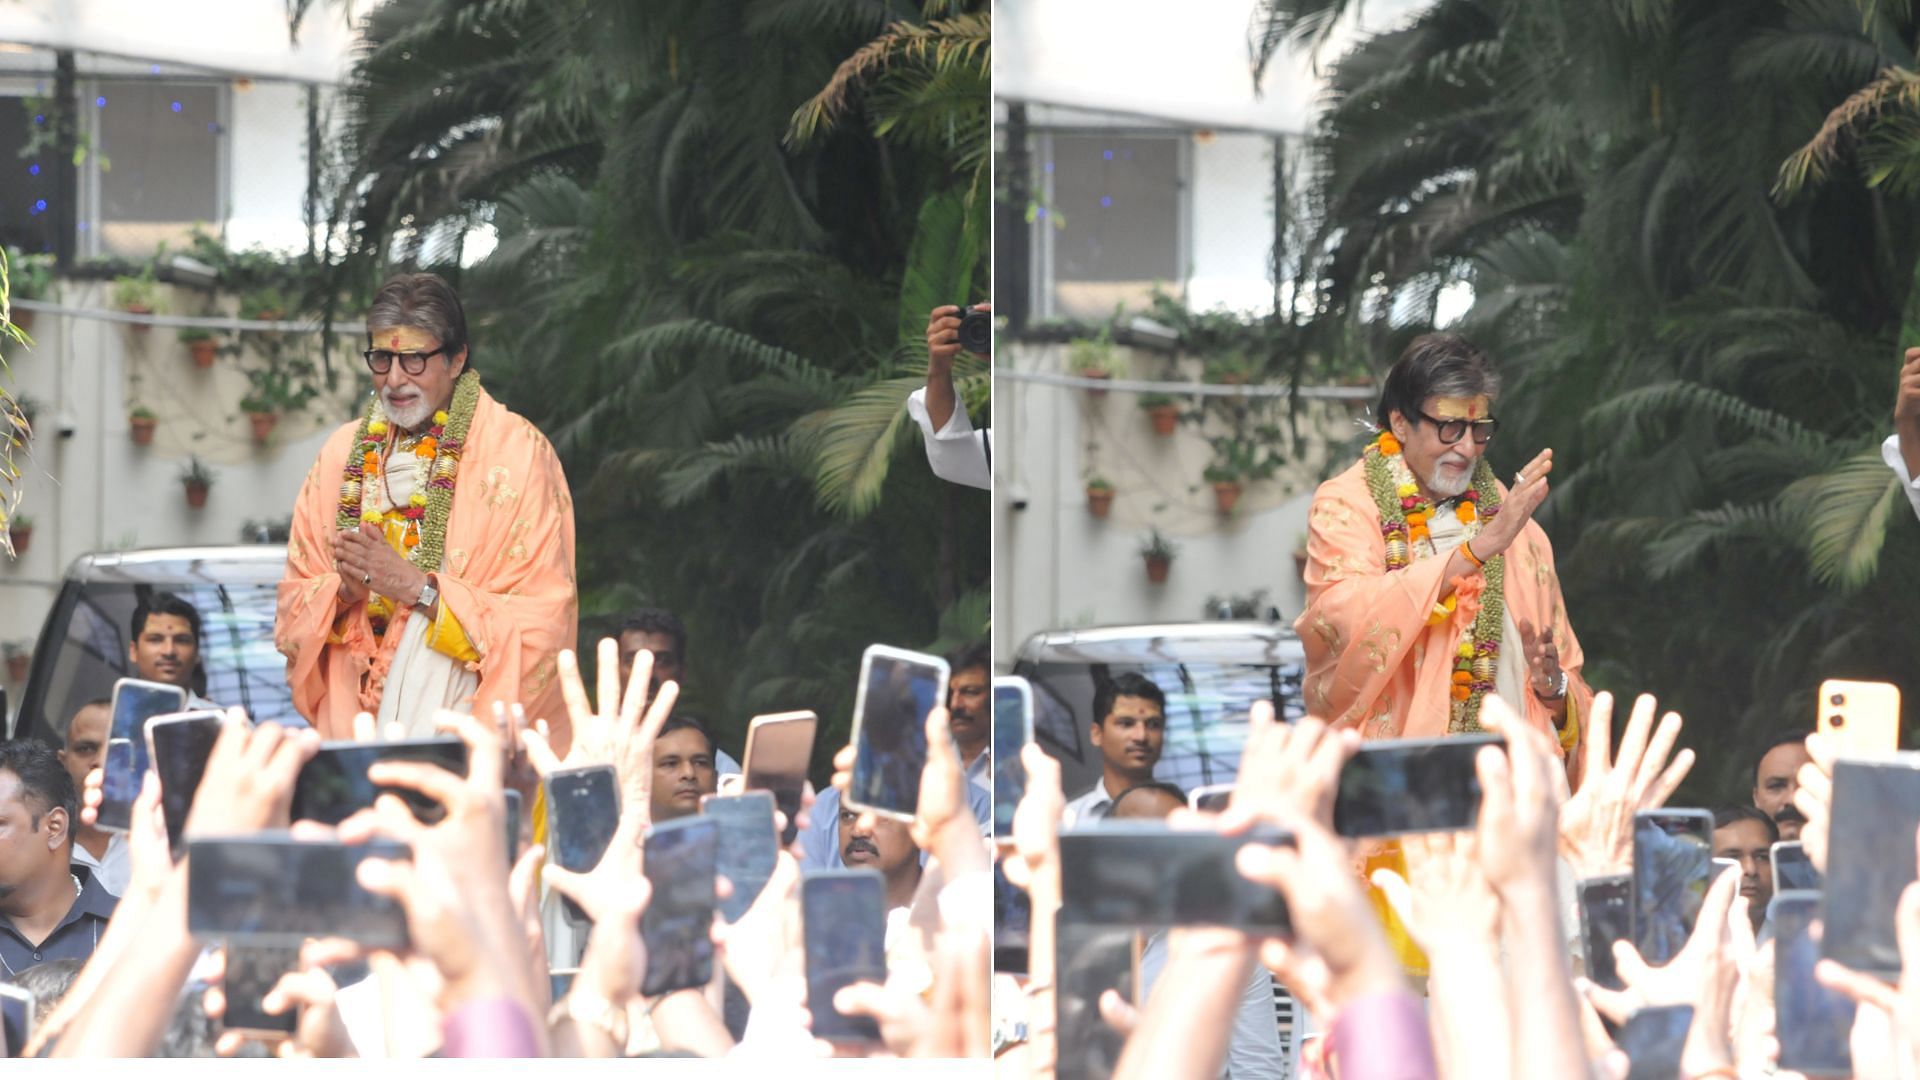 <div class="paragraphs"><p>Fans Go Berserk as Amitabh Bachchan Steps Out to Greet Them</p></div>